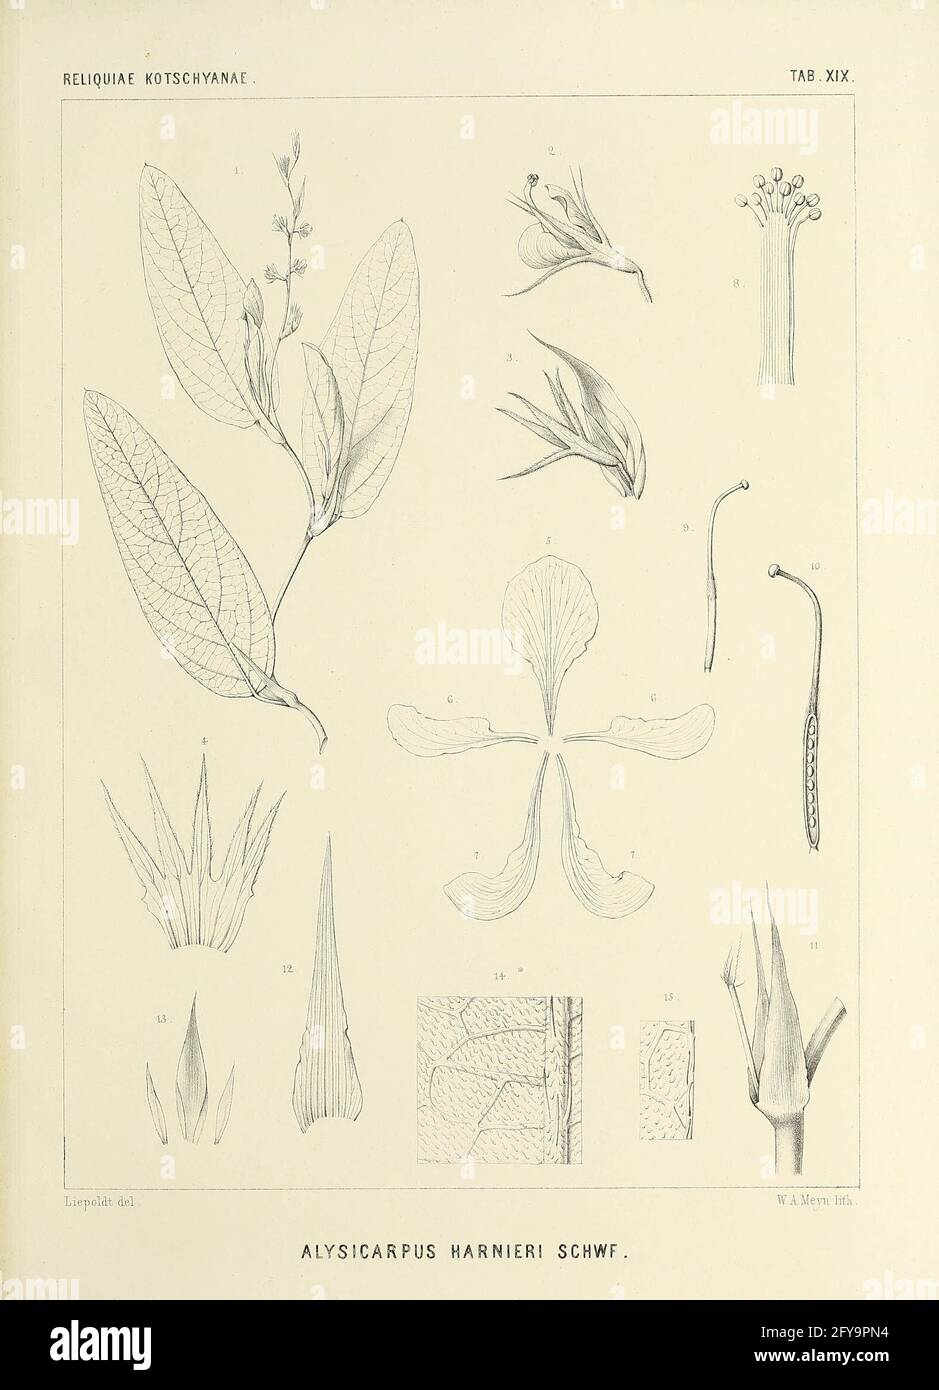 Some plants billed Berlin G. Reimer 1862. Stock Photo